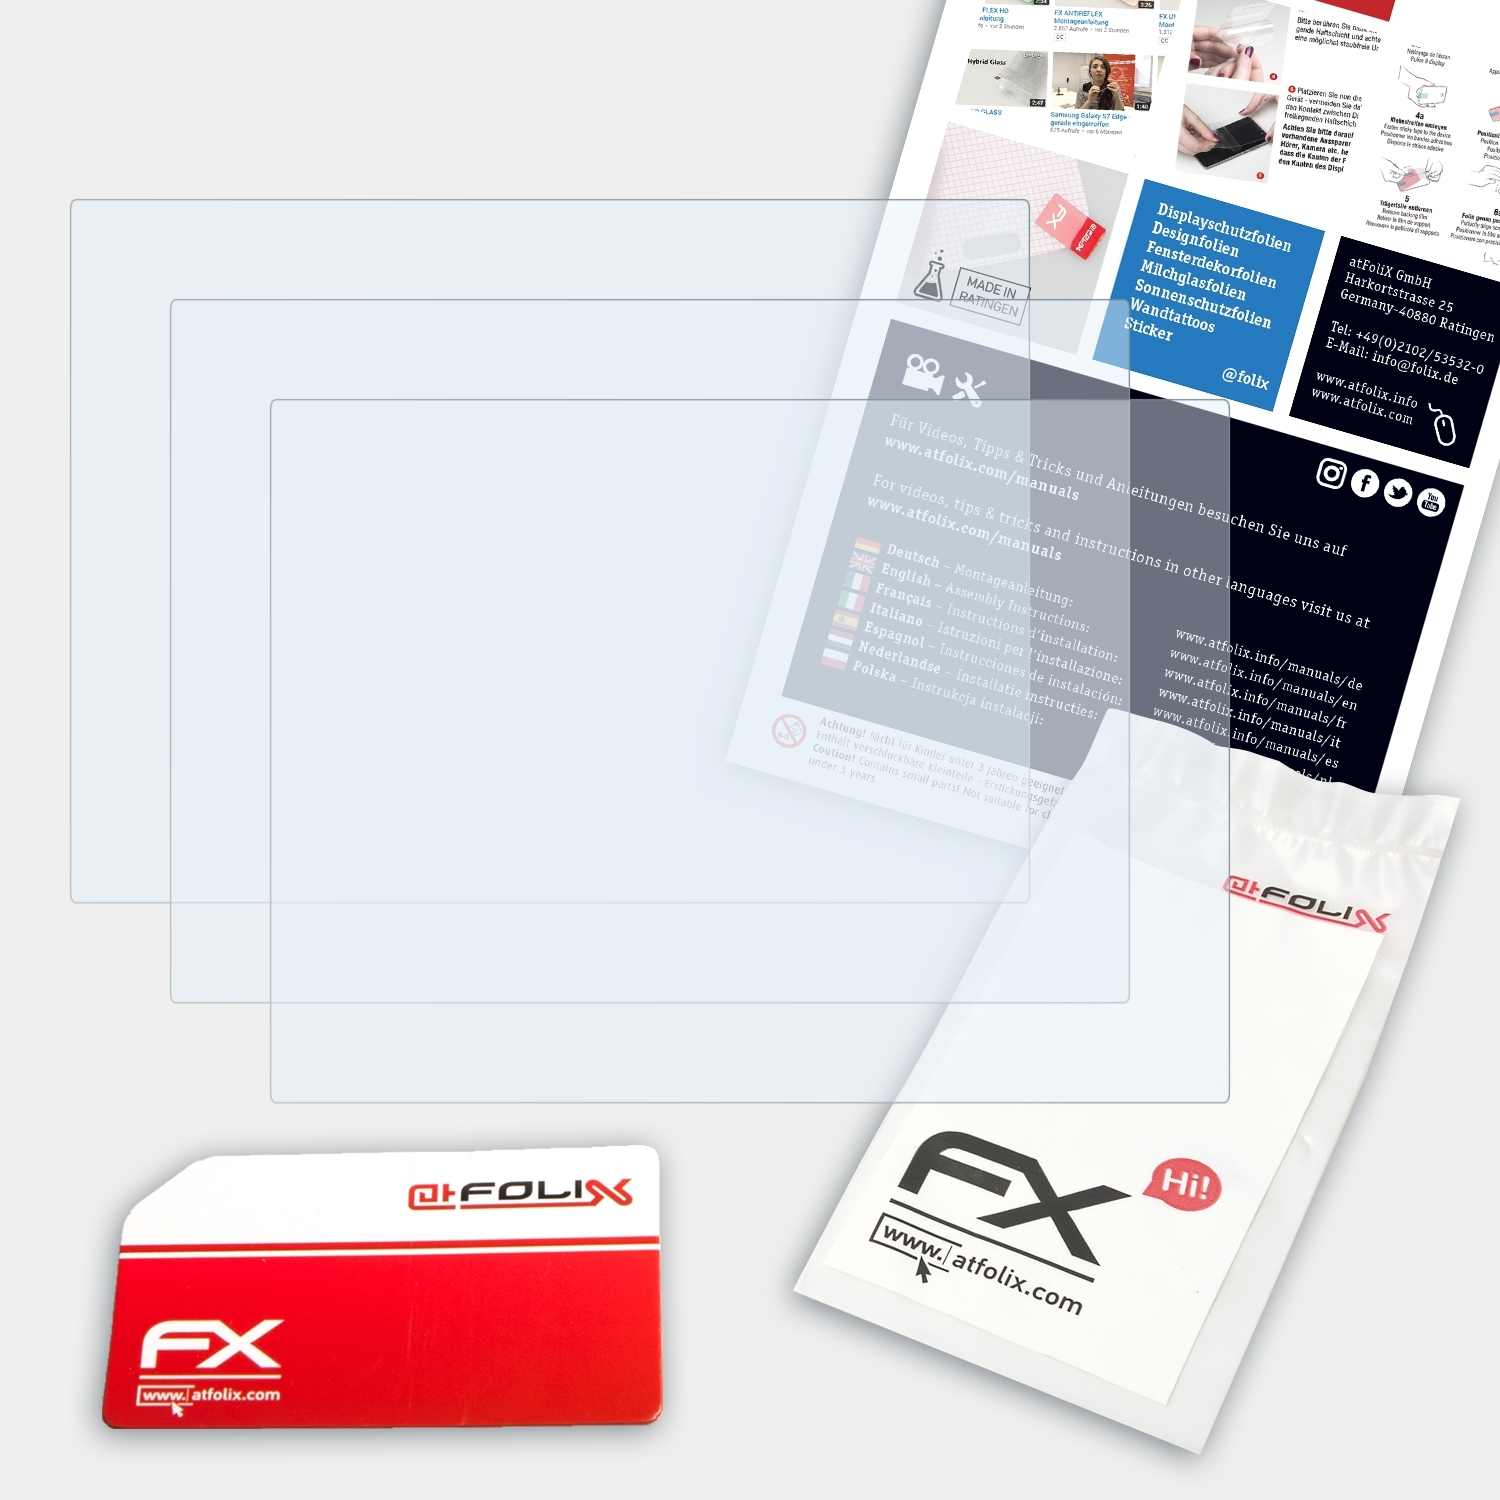 ATFOLIX 3x FX-Clear Displayschutz(für Sony Alpha a7 III)